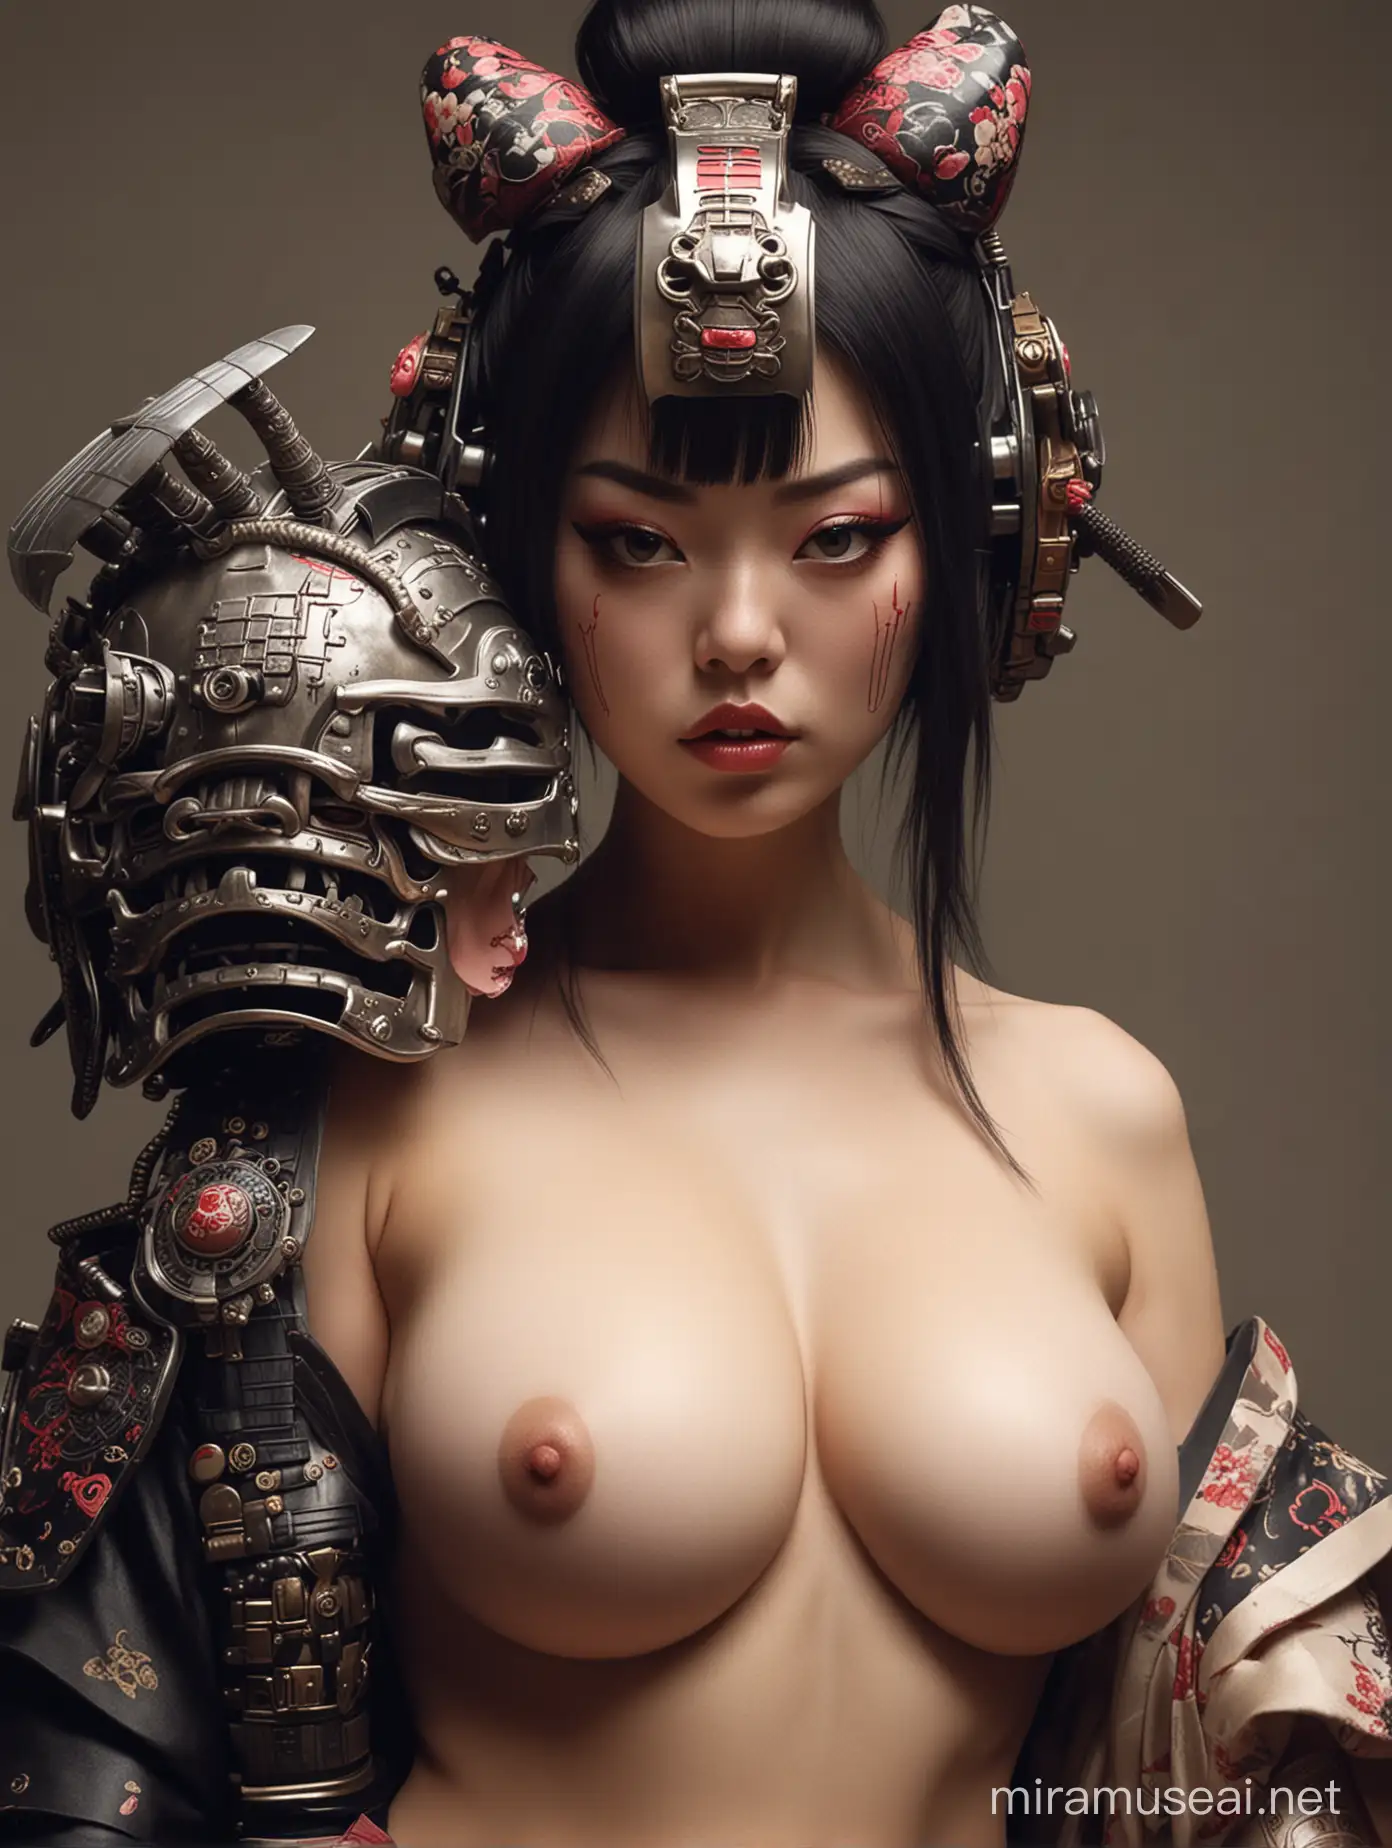 Nude Girl,Very Huge Bubs,Samurai Helmet,Geisha,CyberPunk